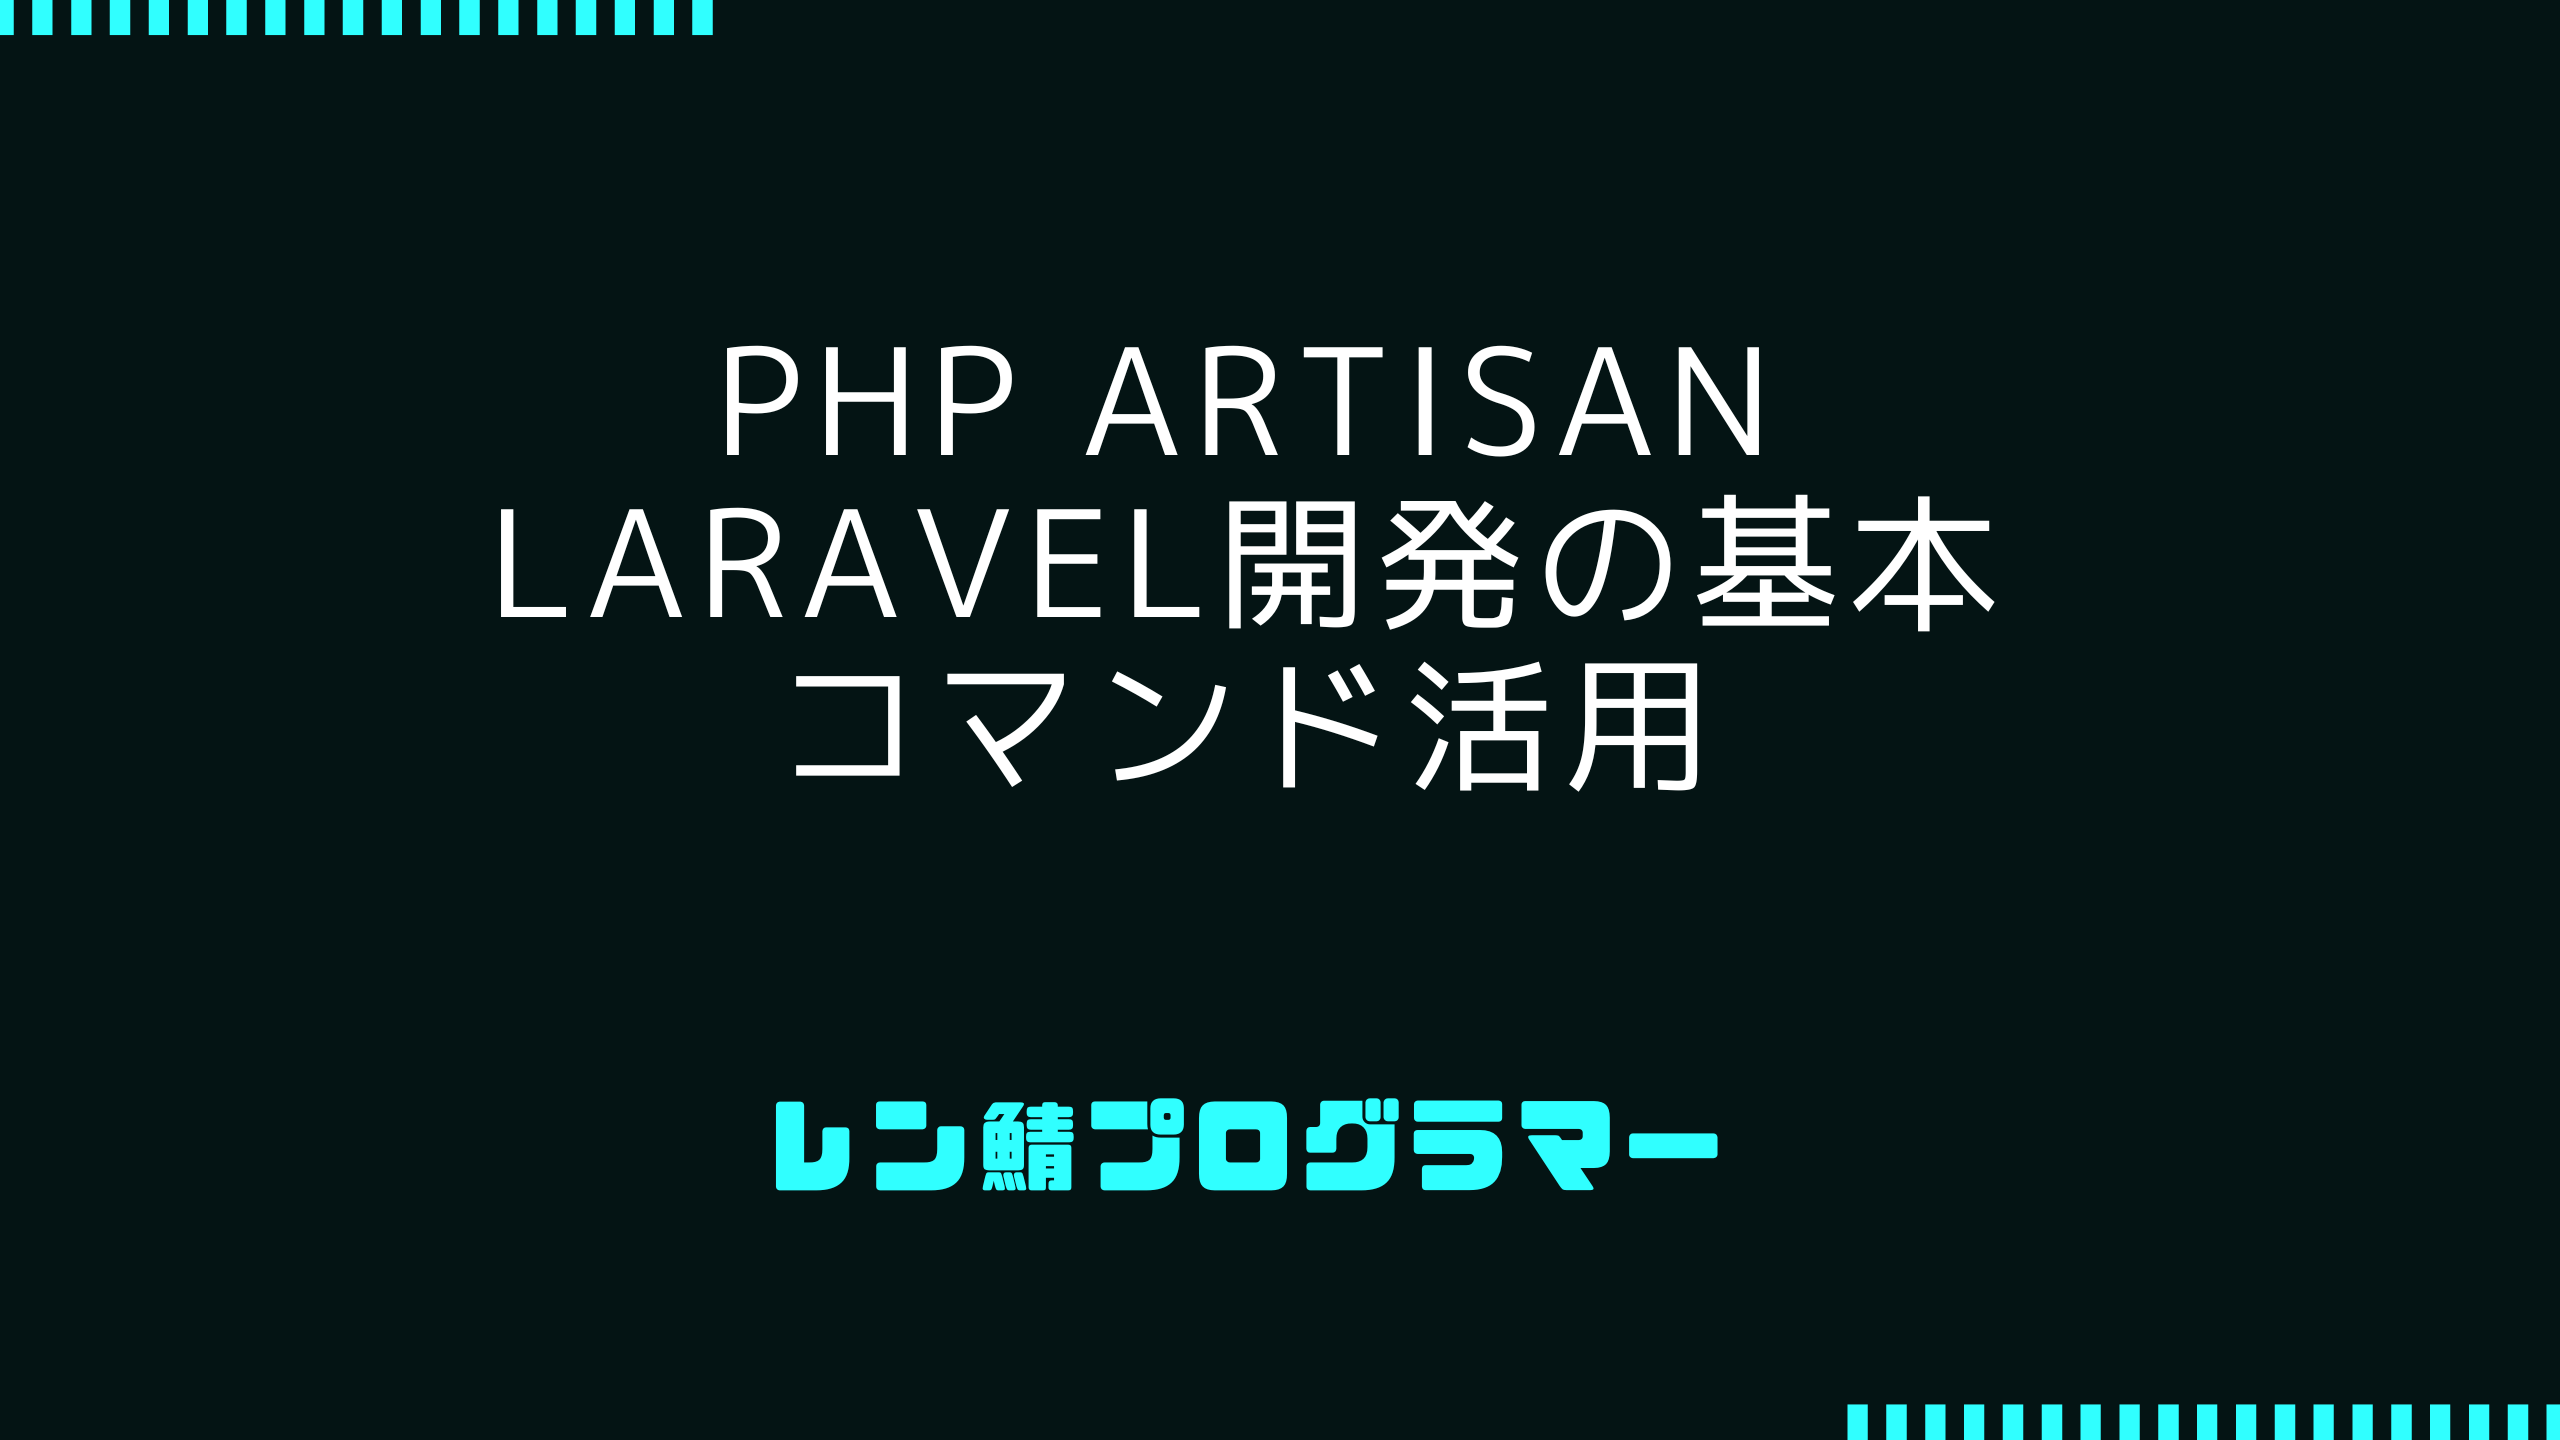 PHP artisan | Laravel開発の基本とコマンド活用法